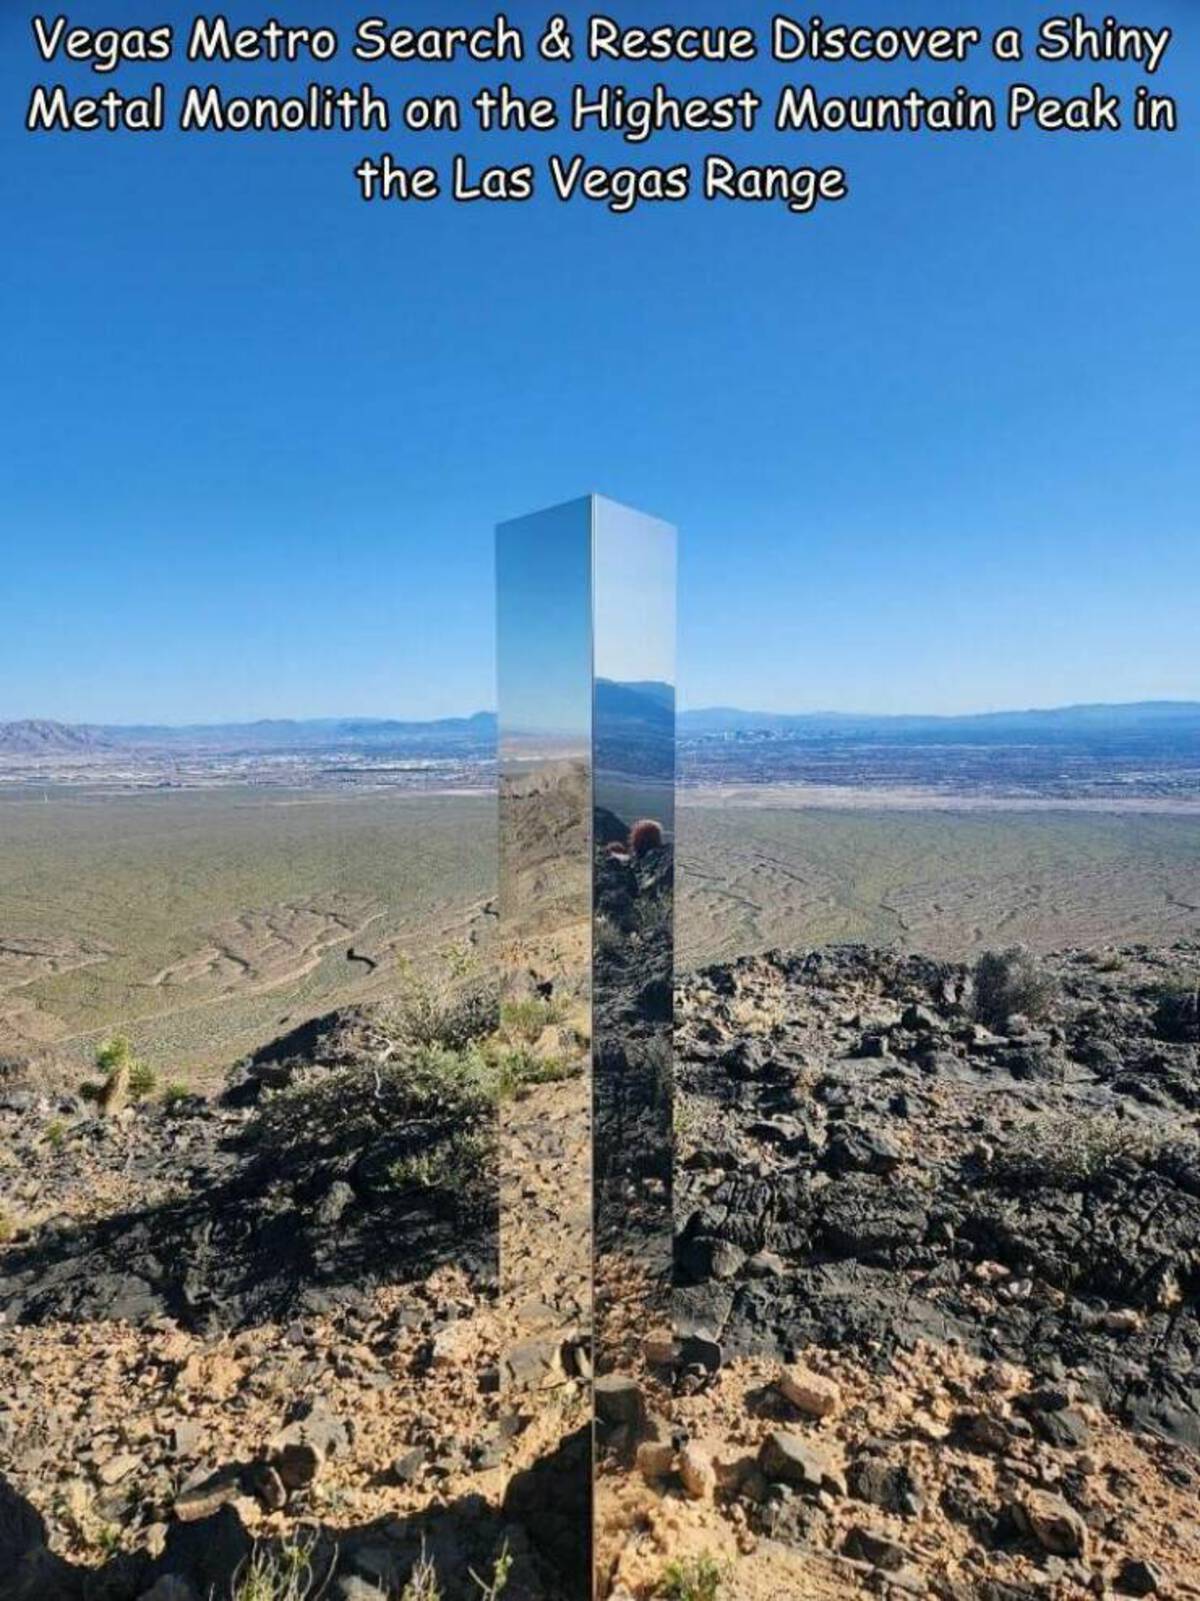 Monolith - Vegas Metro Search & Rescue Discover a Shiny Metal Monolith on the Highest Mountain Peak in the Las Vegas Range